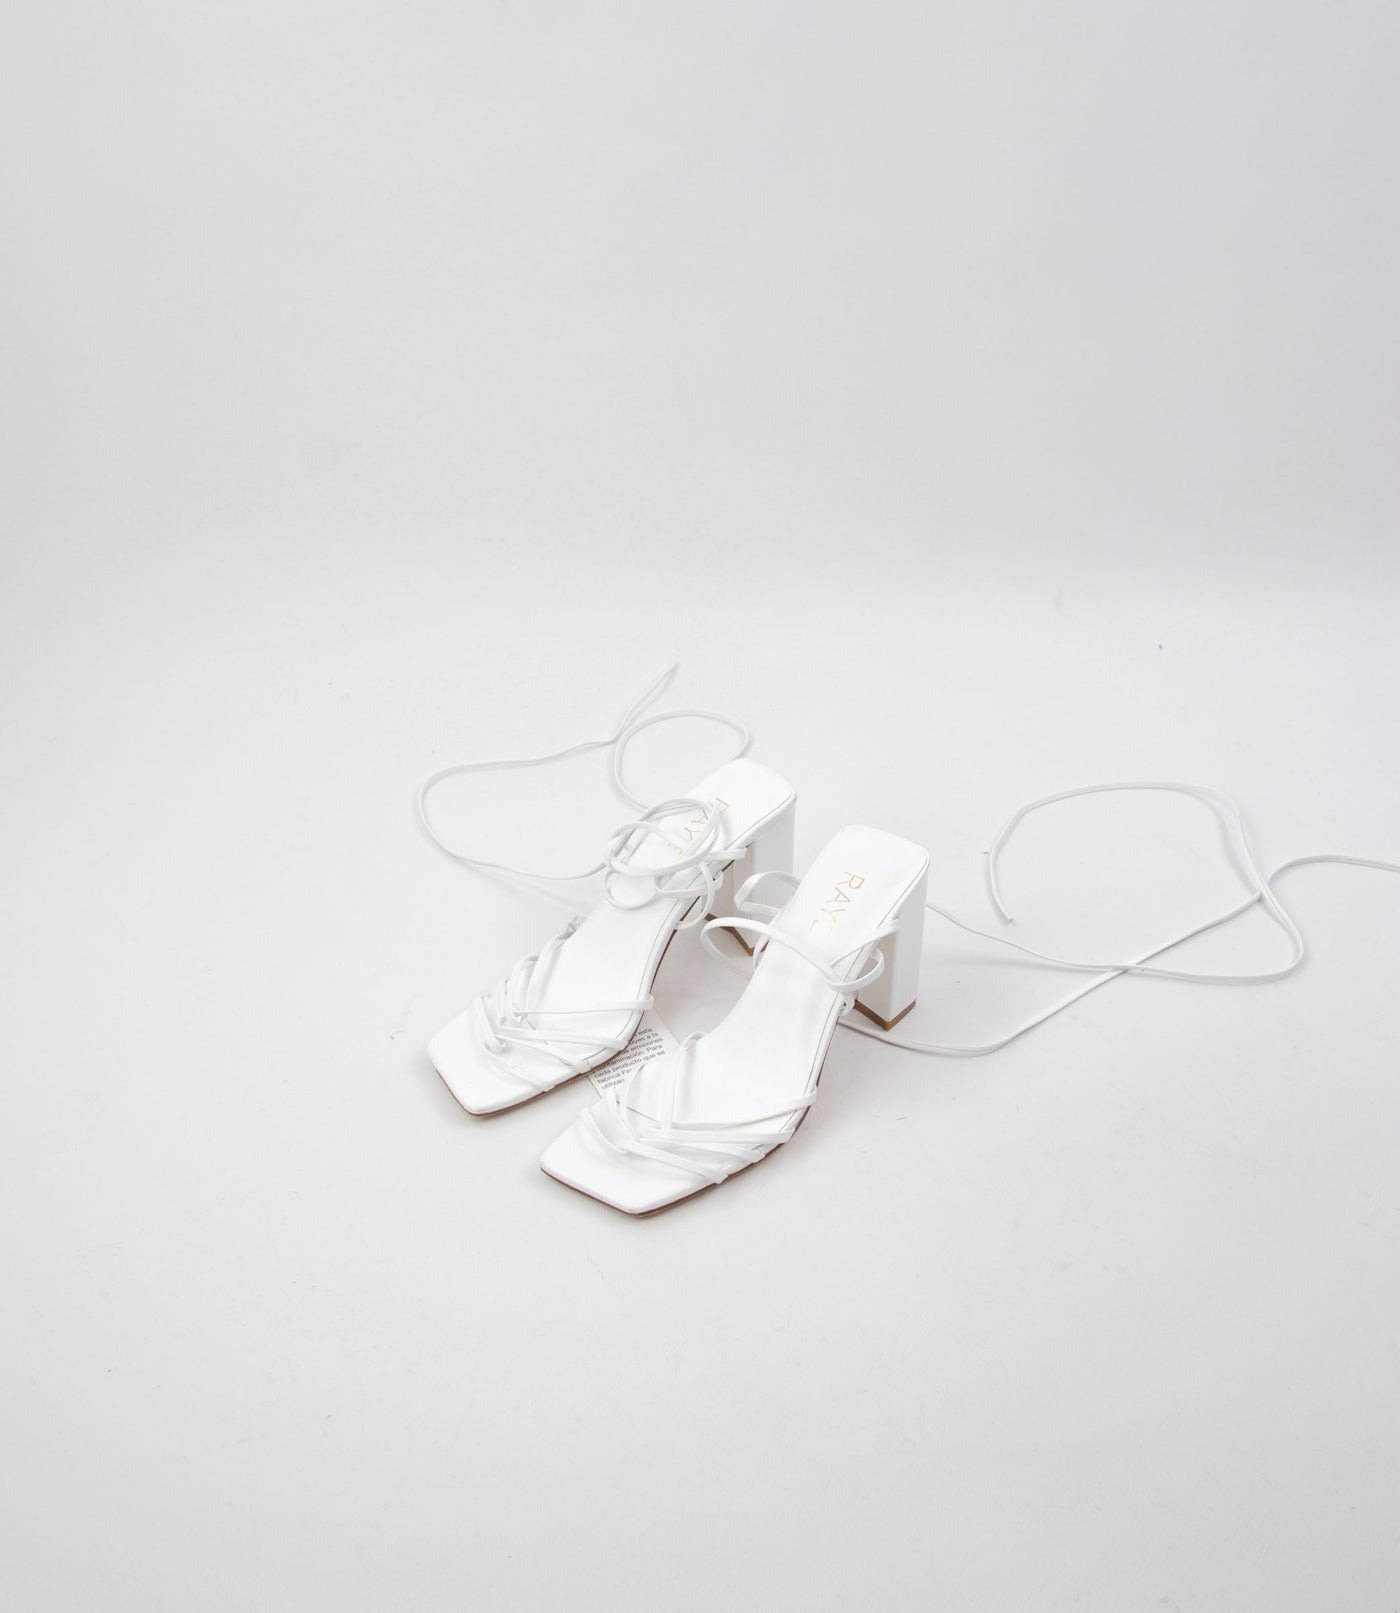 Sandalias blancas romanas de tacón